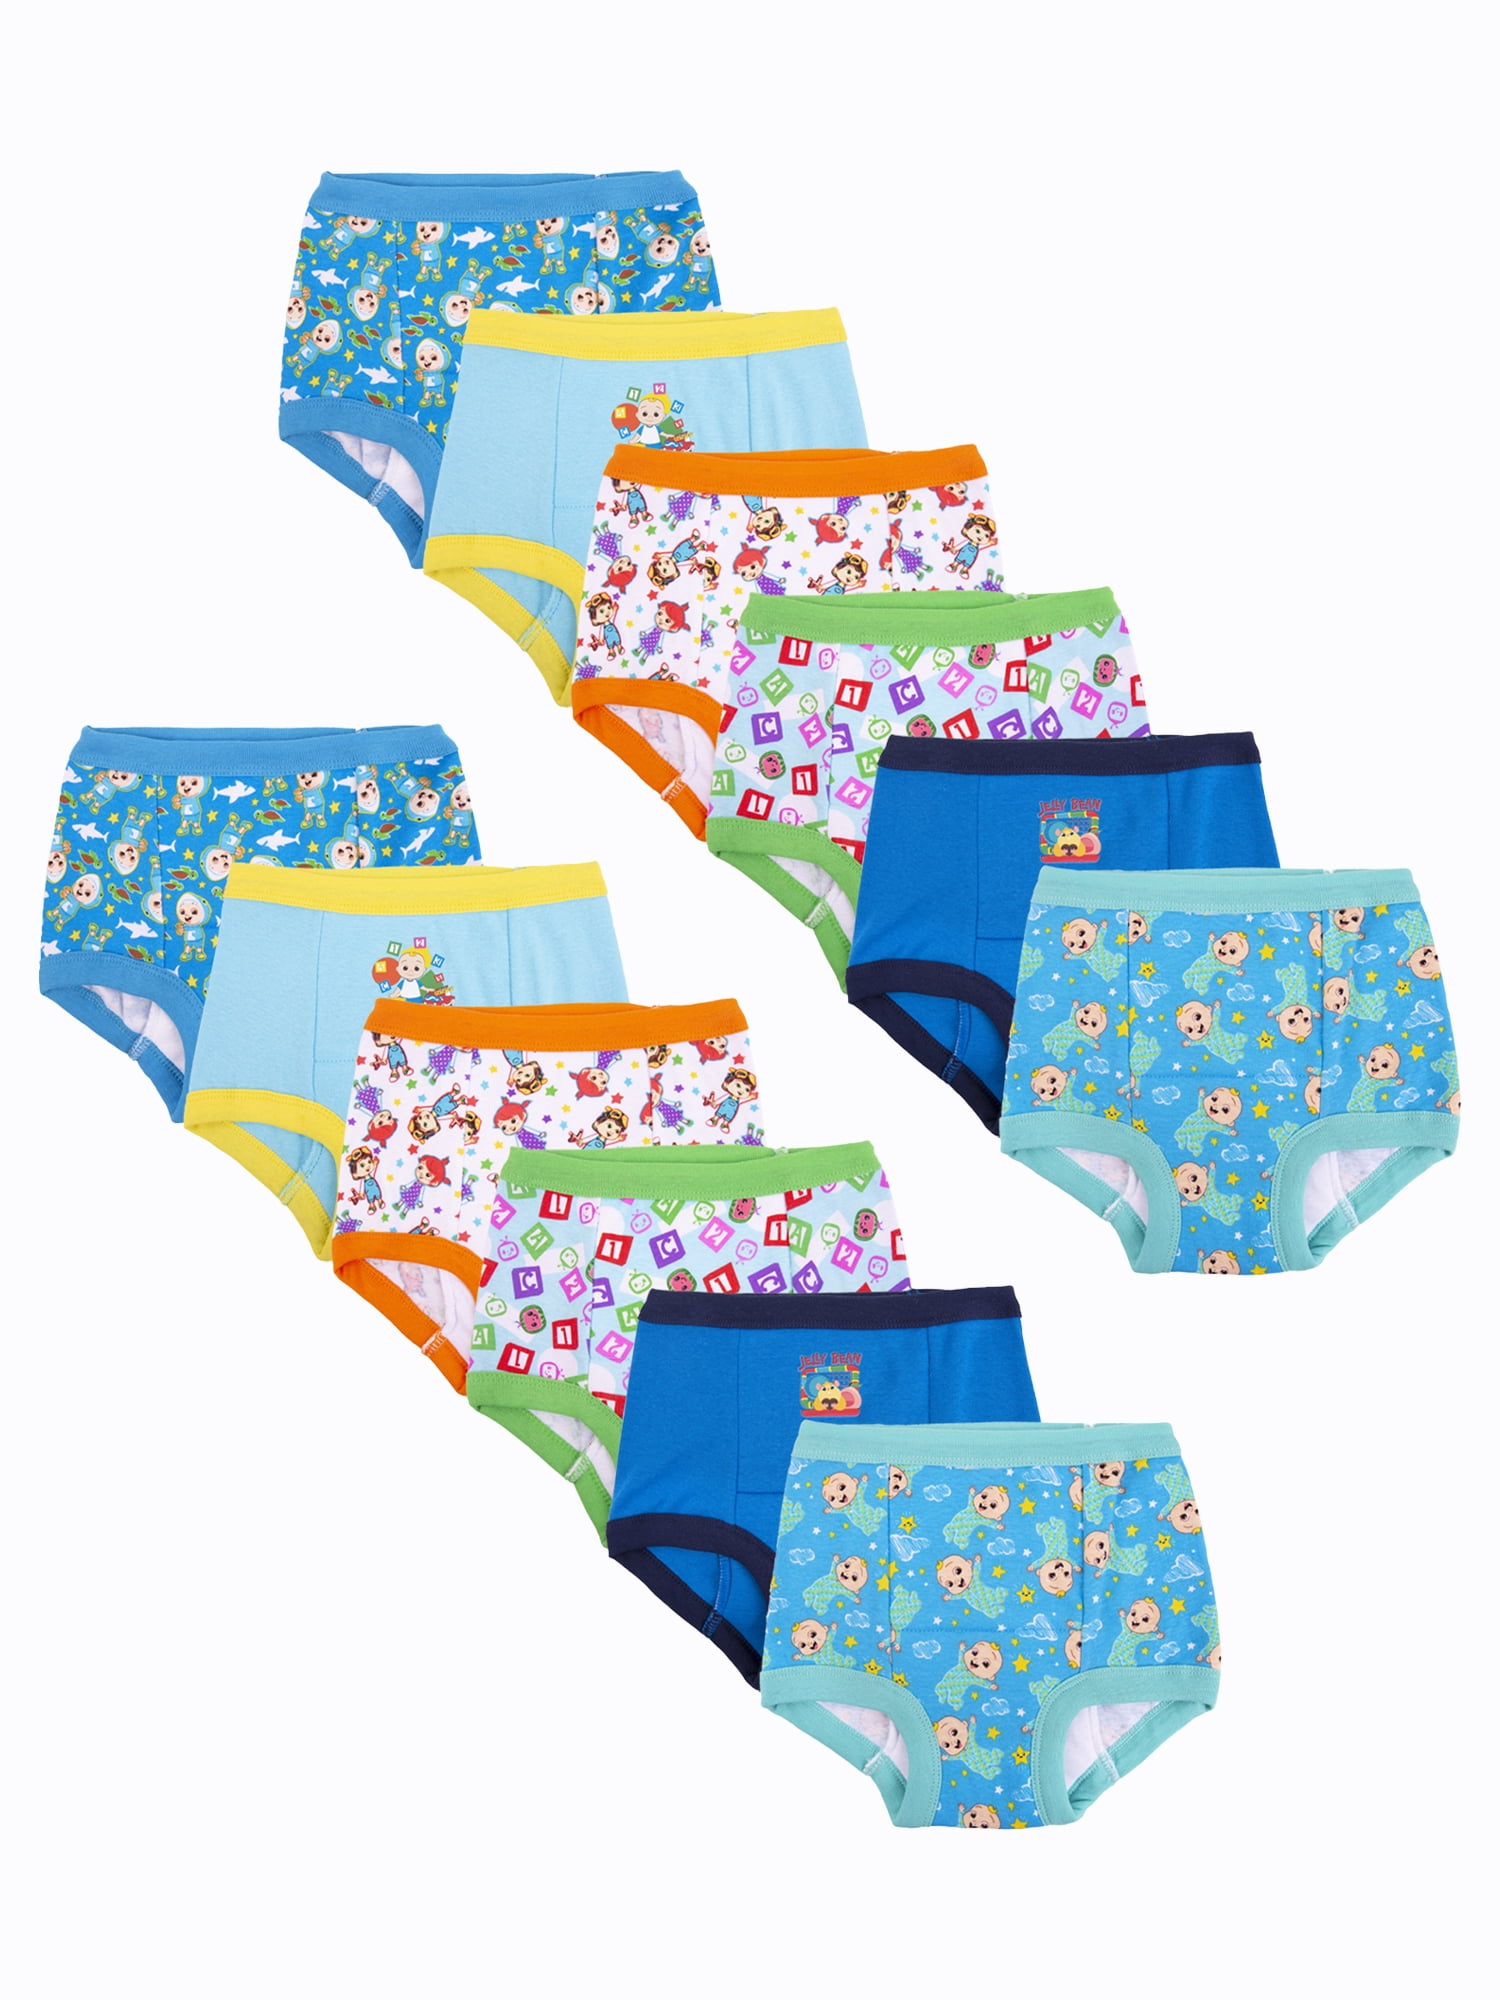 Bluey Toddler Boys' Training Pants, 6 - Pack, Sizes 4T 